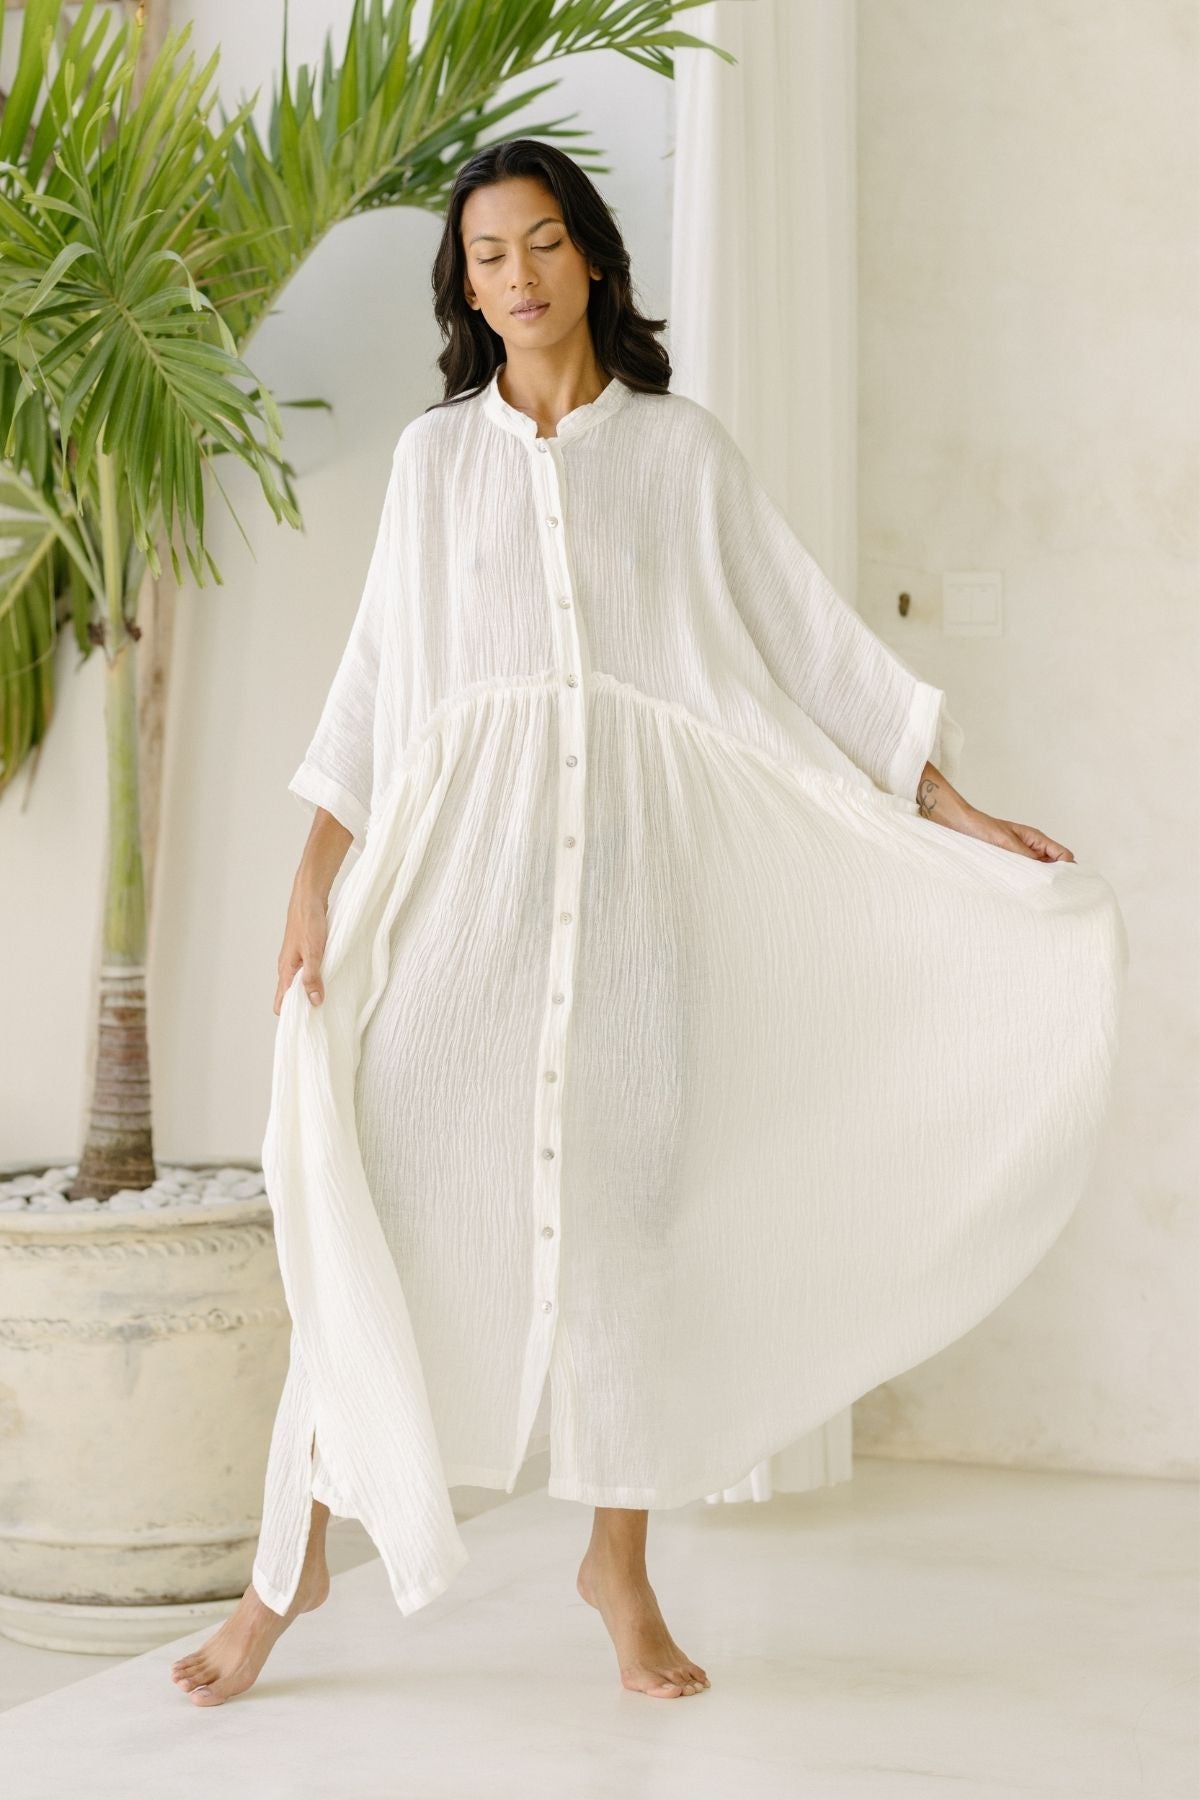 Bona Dress (Cotton/Linen Crinkle)